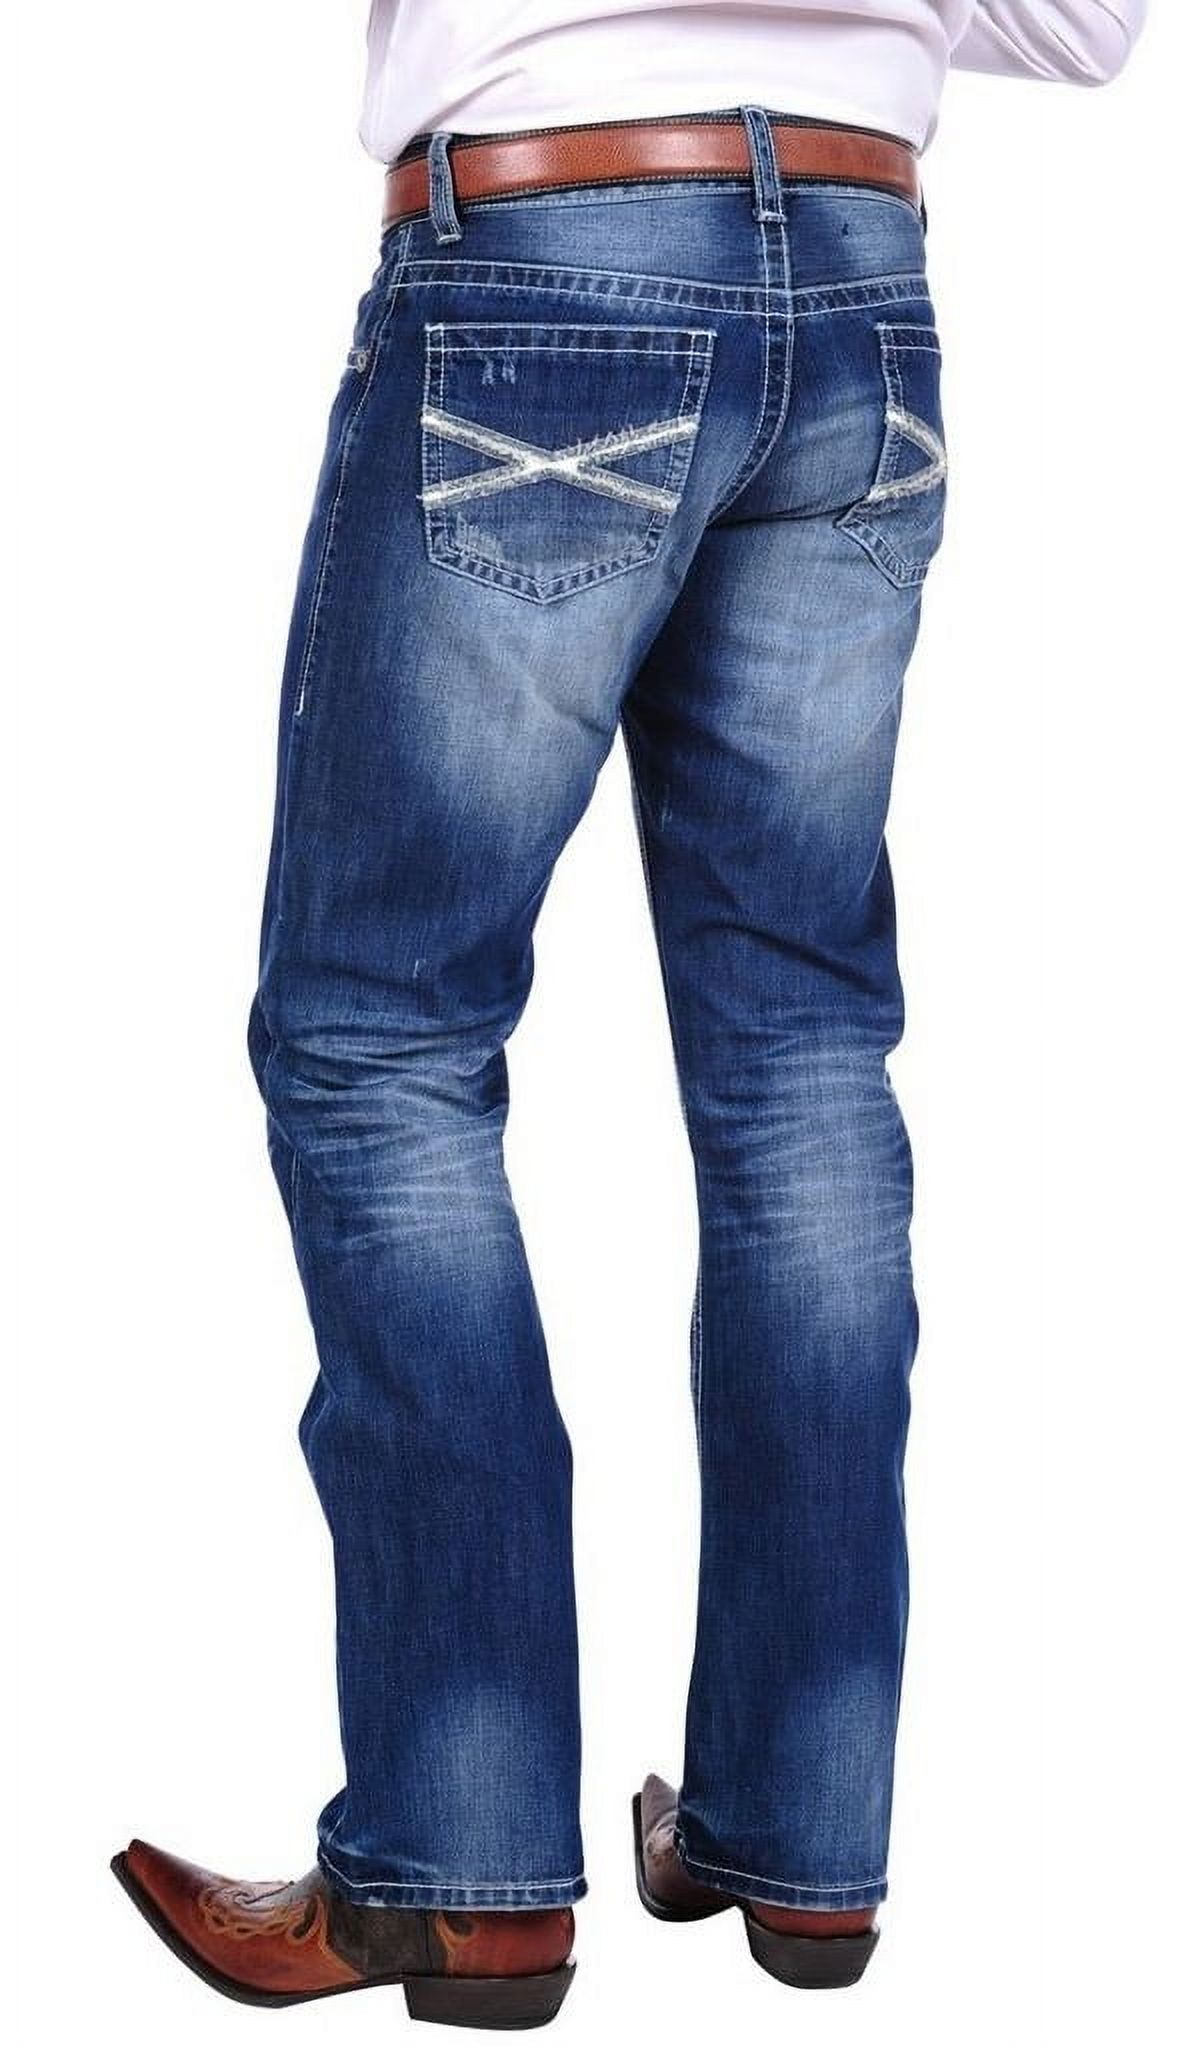 Stetson Denim Jeans Mens Rocks Fit Medium Wash 11-004-1014-3001 BU - image 2 of 3